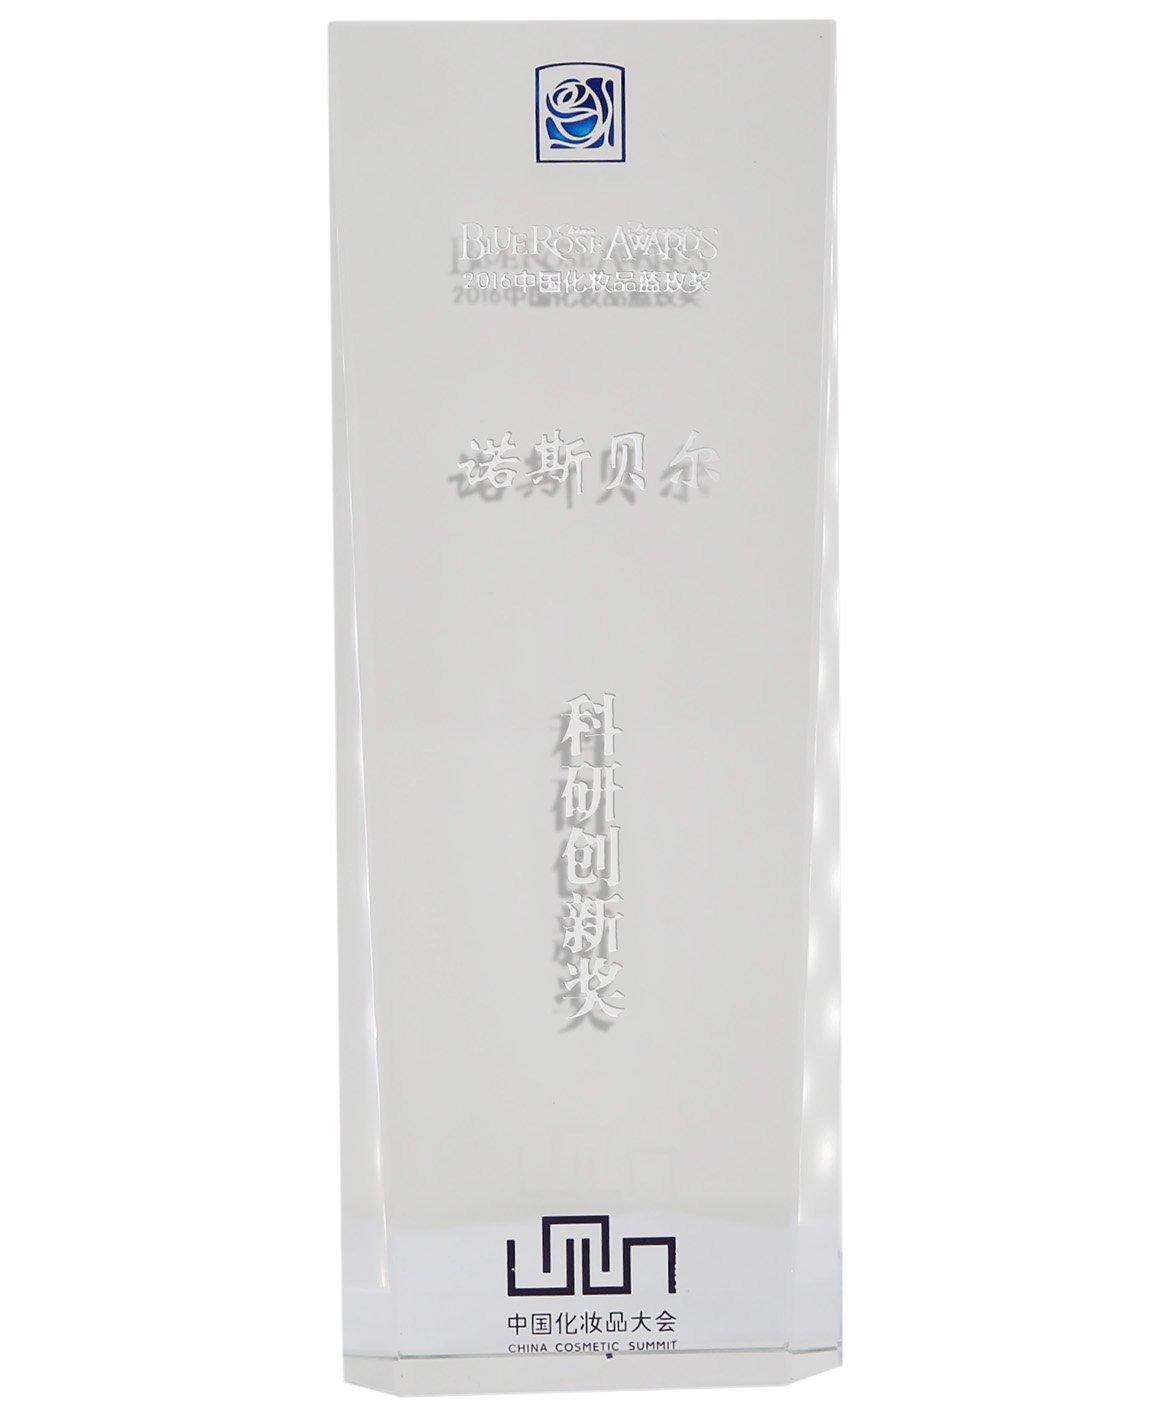 China Cosmetics Blue Rose Award Research Innovation Award 2016